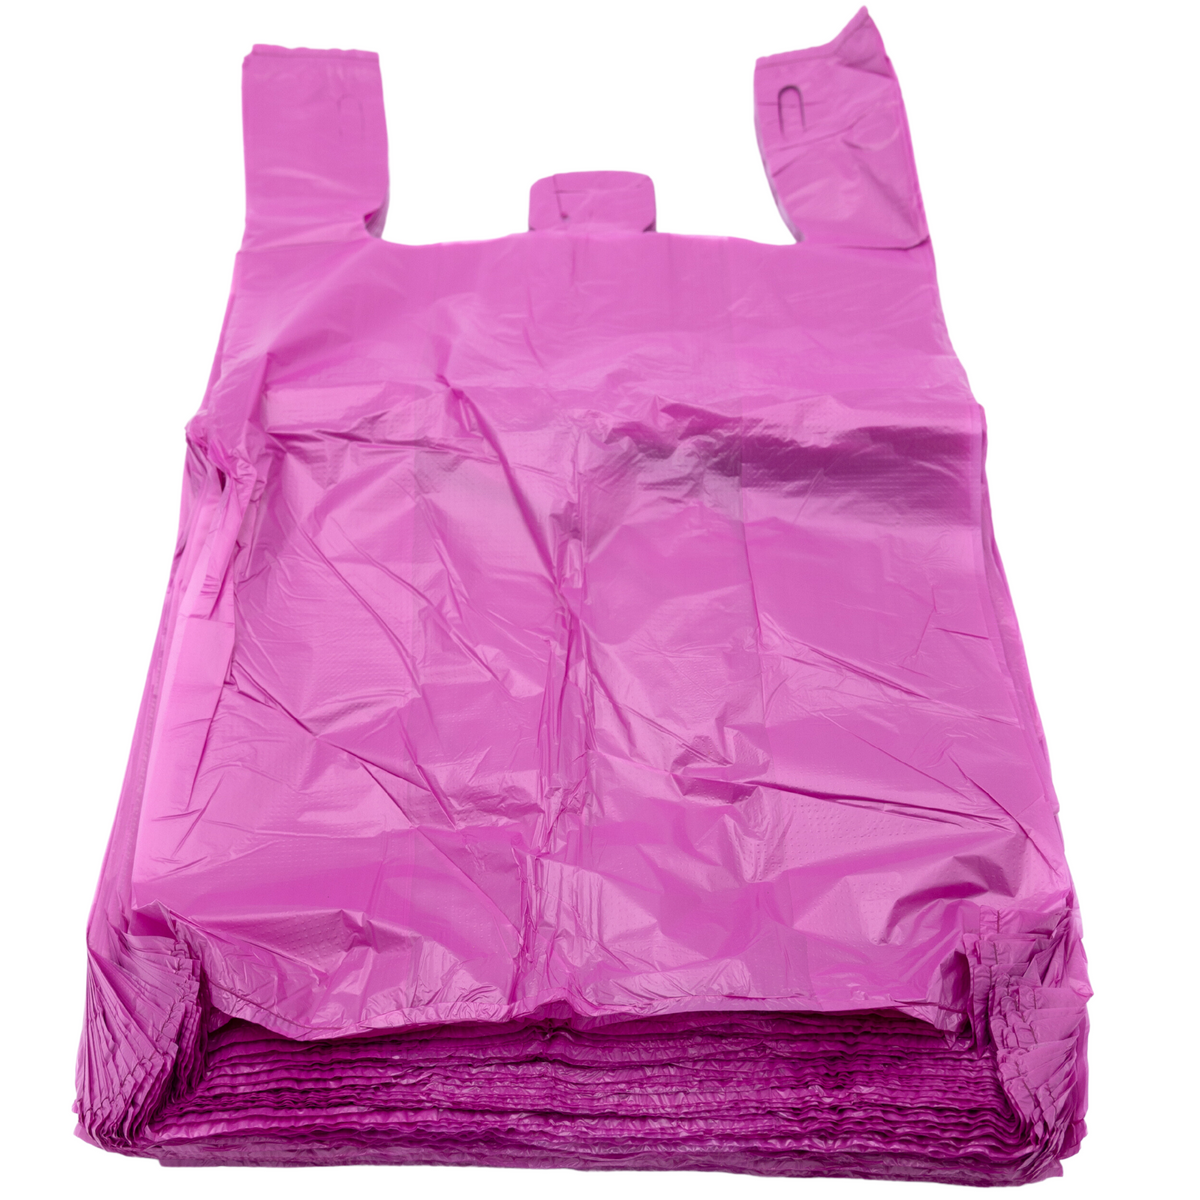 Custom Printed HDPE Plastic T-Shirt Style Bag - 11.5 x 6.5 x 21 -  Pharmacy Automation Supplies